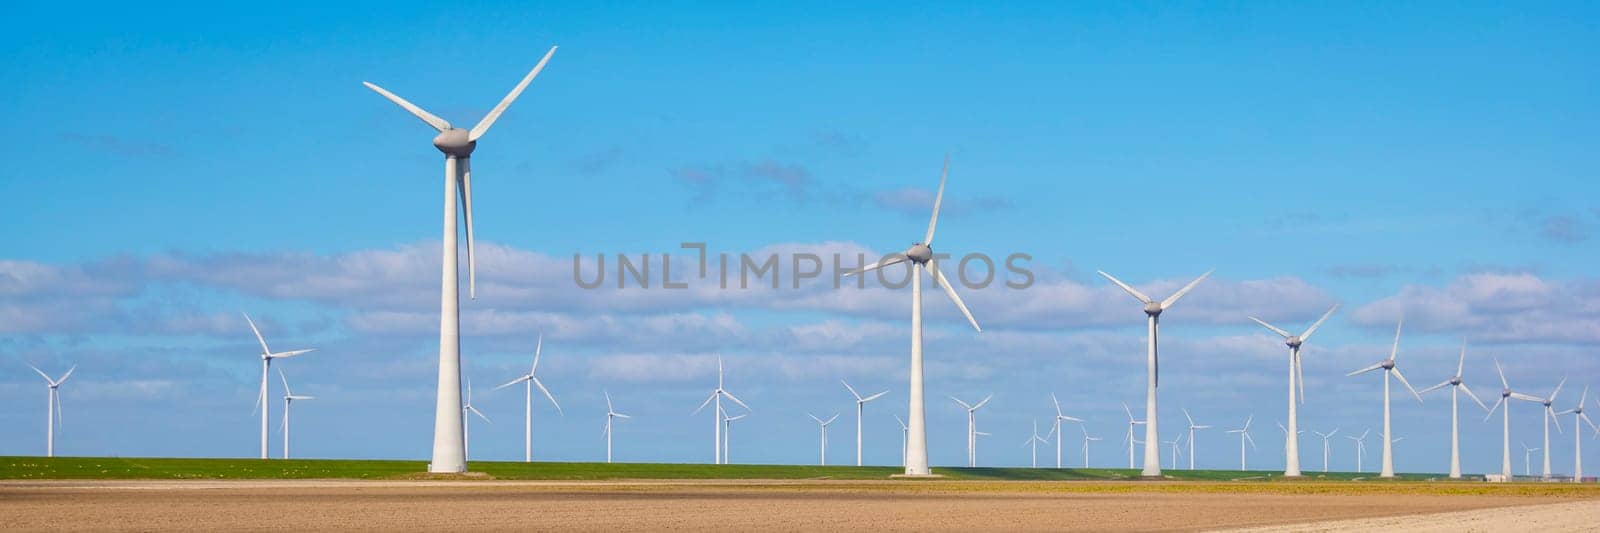 Windmill park on the dike of Lake Ijsselmeer, drone aerial view of windmill turbines generating green energy, windmills in the Netherlands.